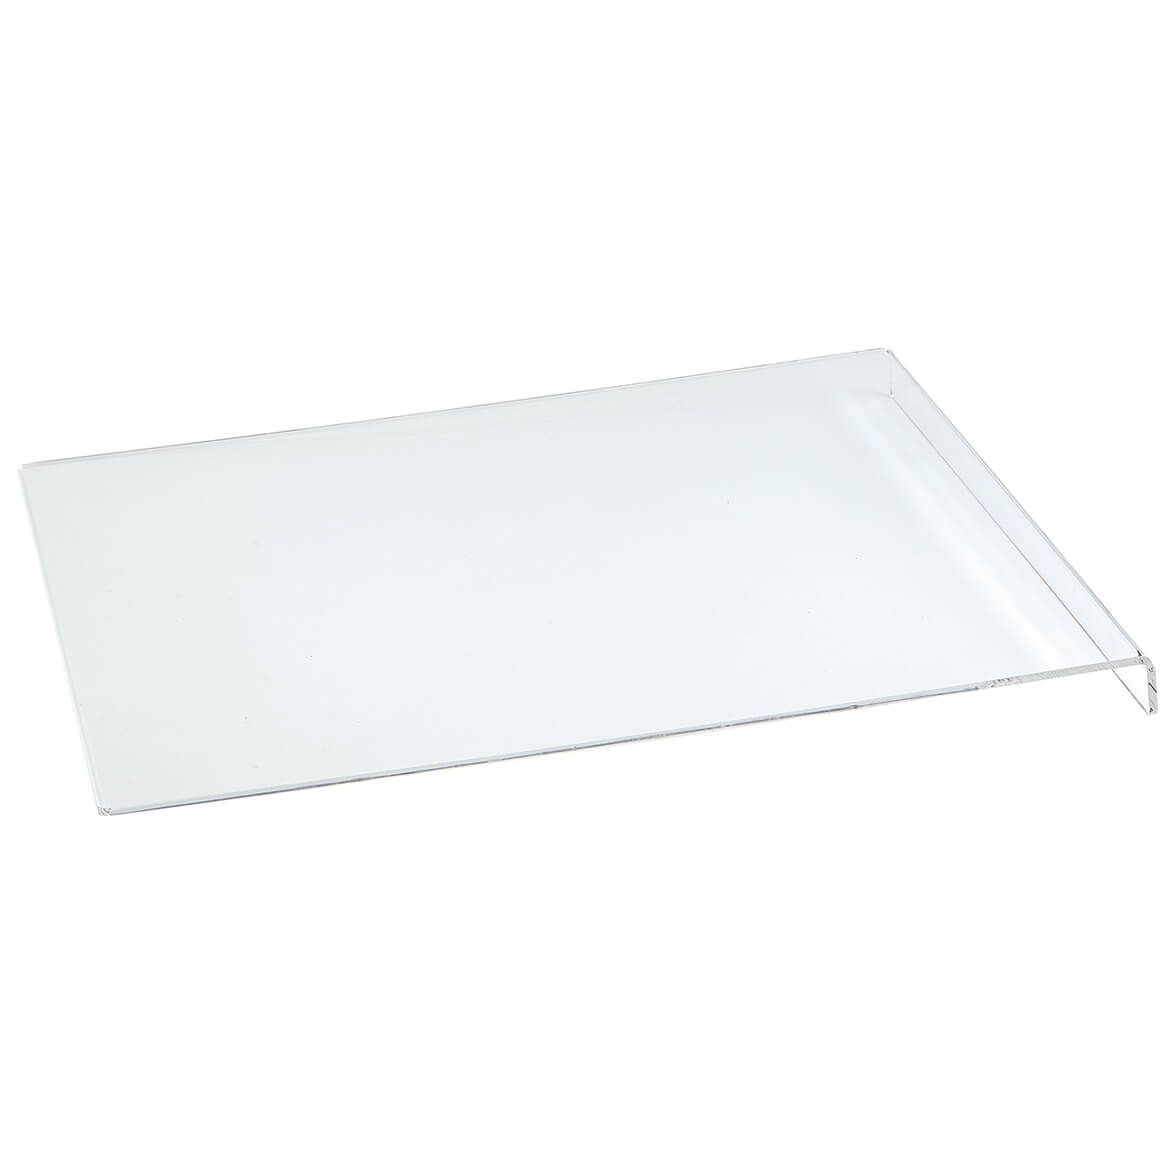 Countertop Cutting Board + '-' + 373397